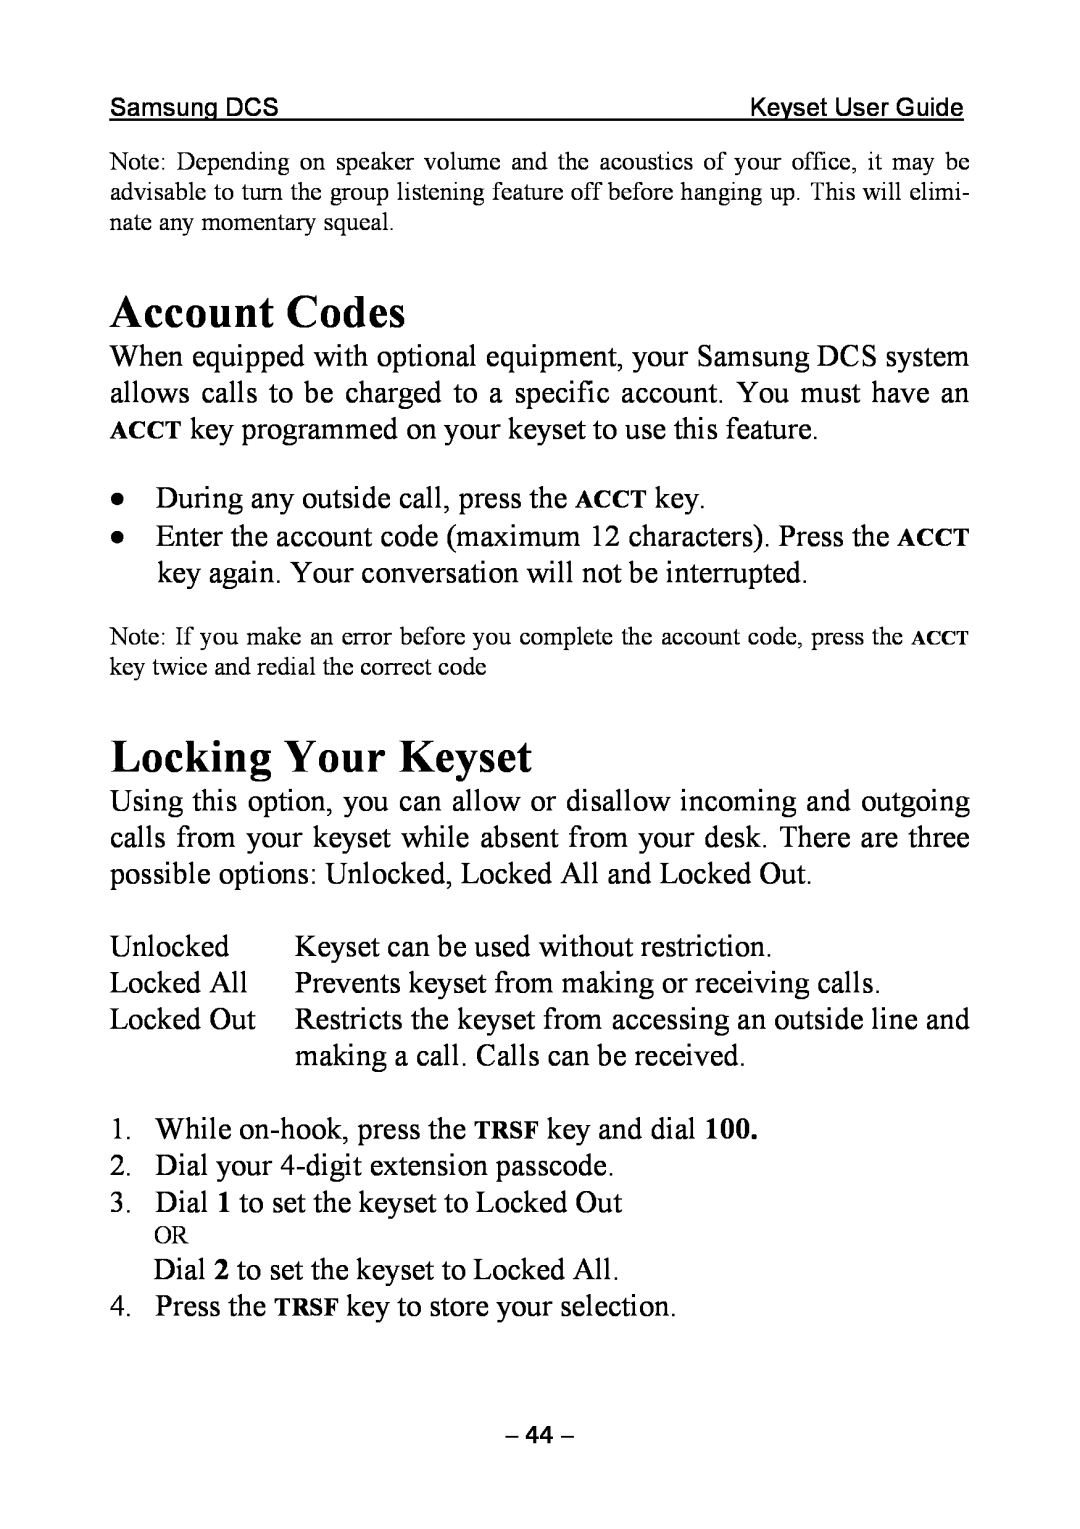 Samsung DCS KEYSET manual Account Codes, Locking Your Keyset 